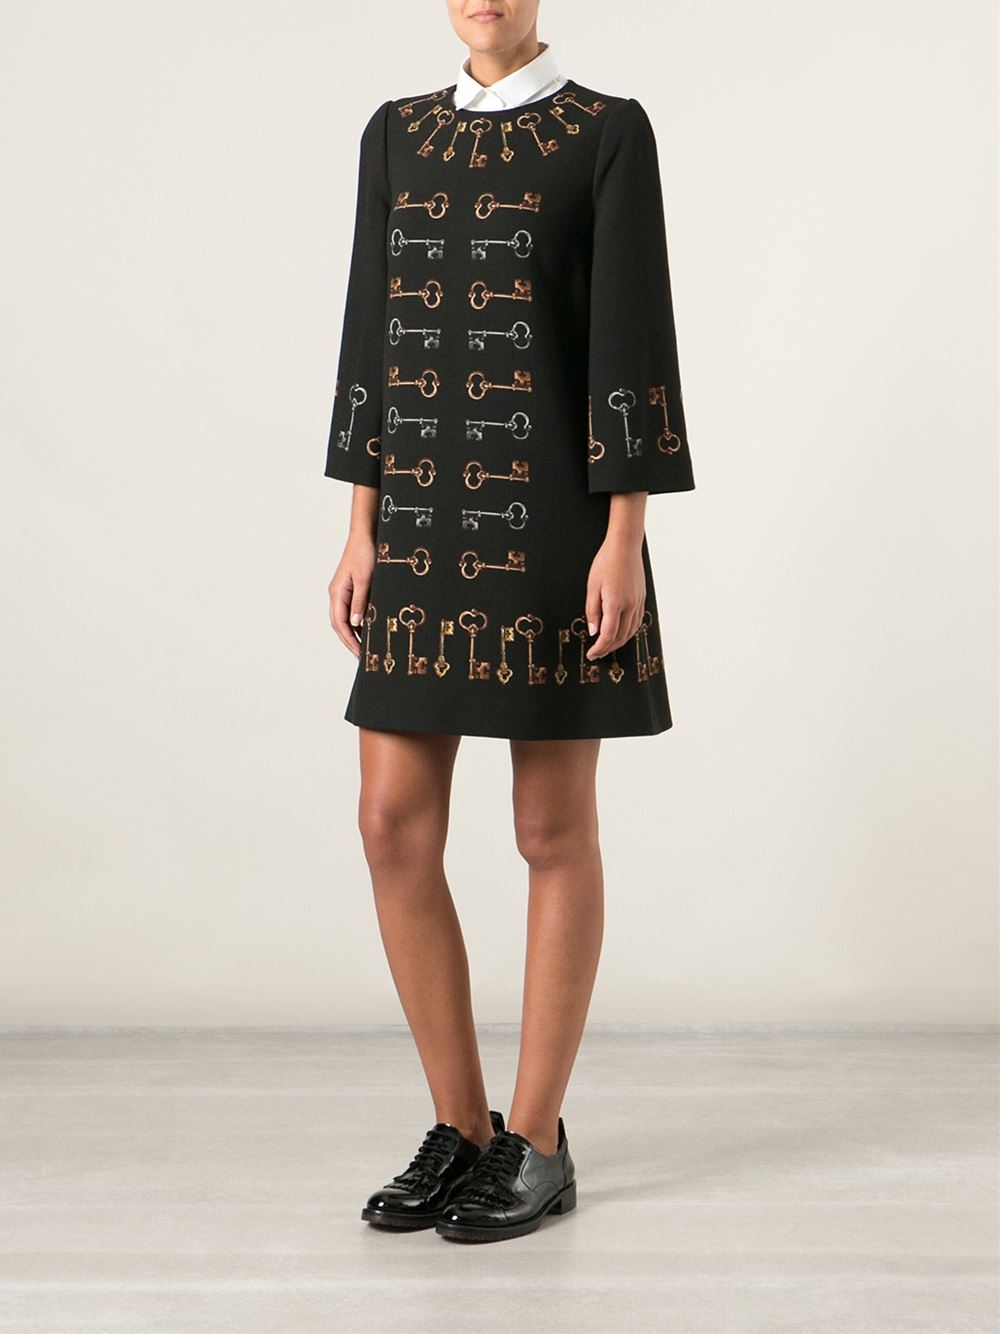 Dolce & Gabbana Medieval Keys Print Dress in Black - Lyst